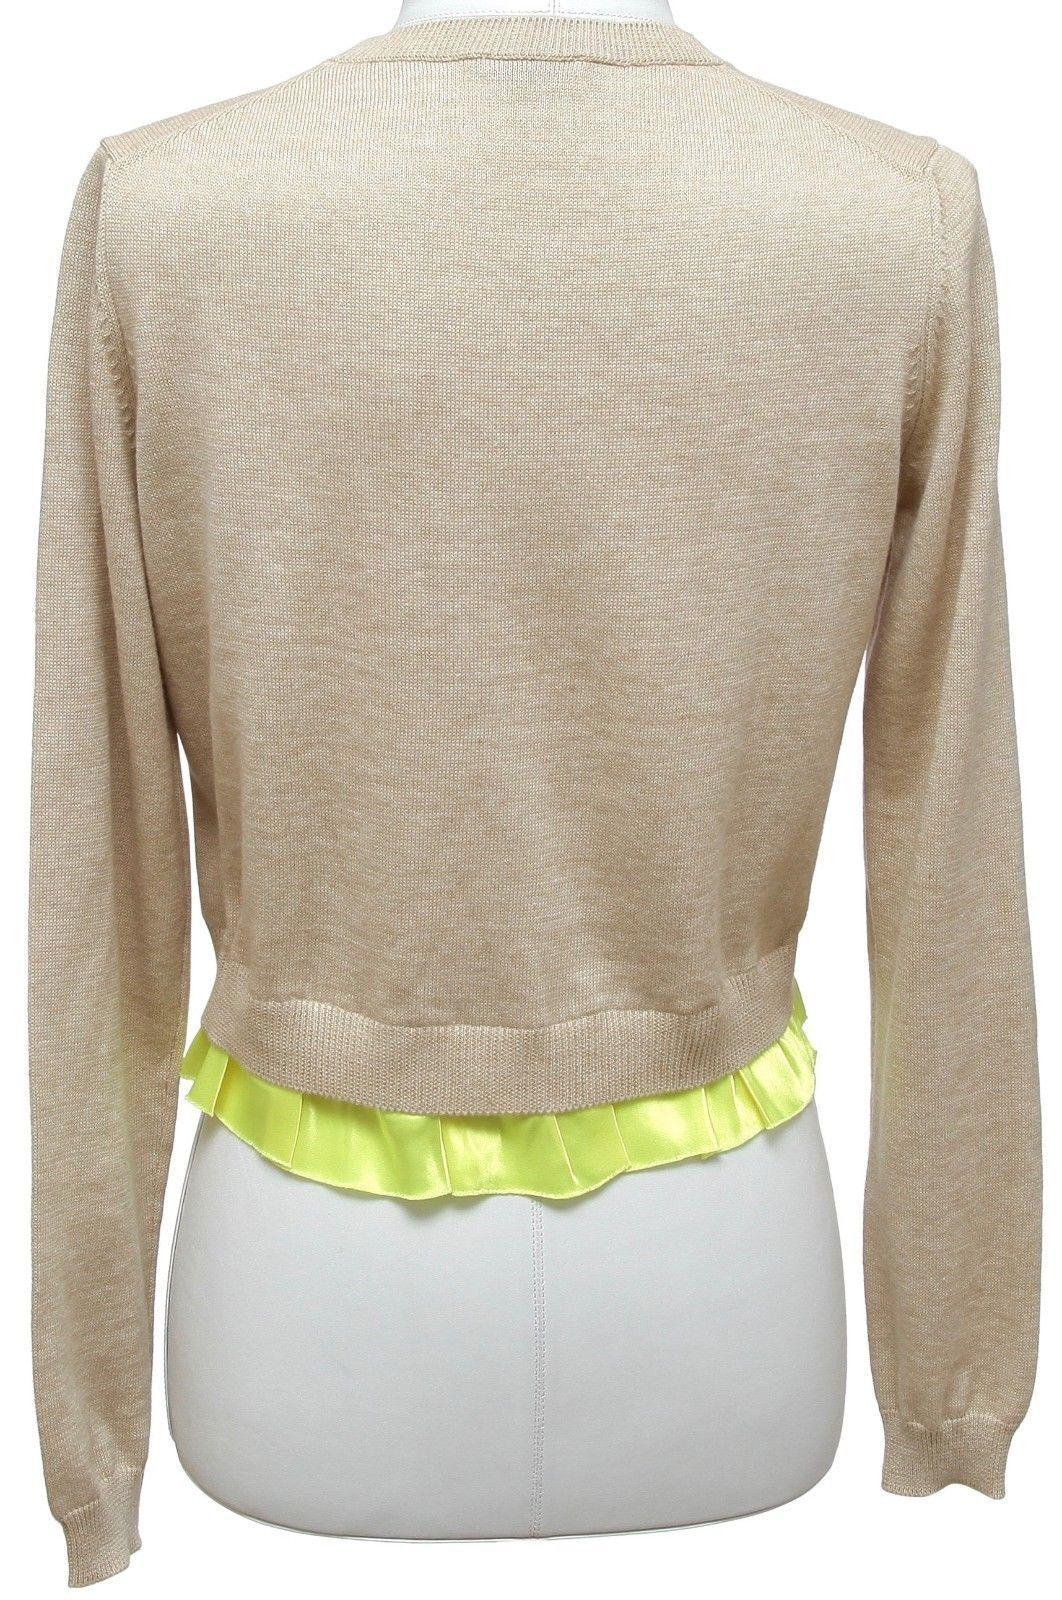 MIU MIU Sweater Knit Top Cotton Viscose Tan Yellow Silk Long Sleeve 40 NWT 1